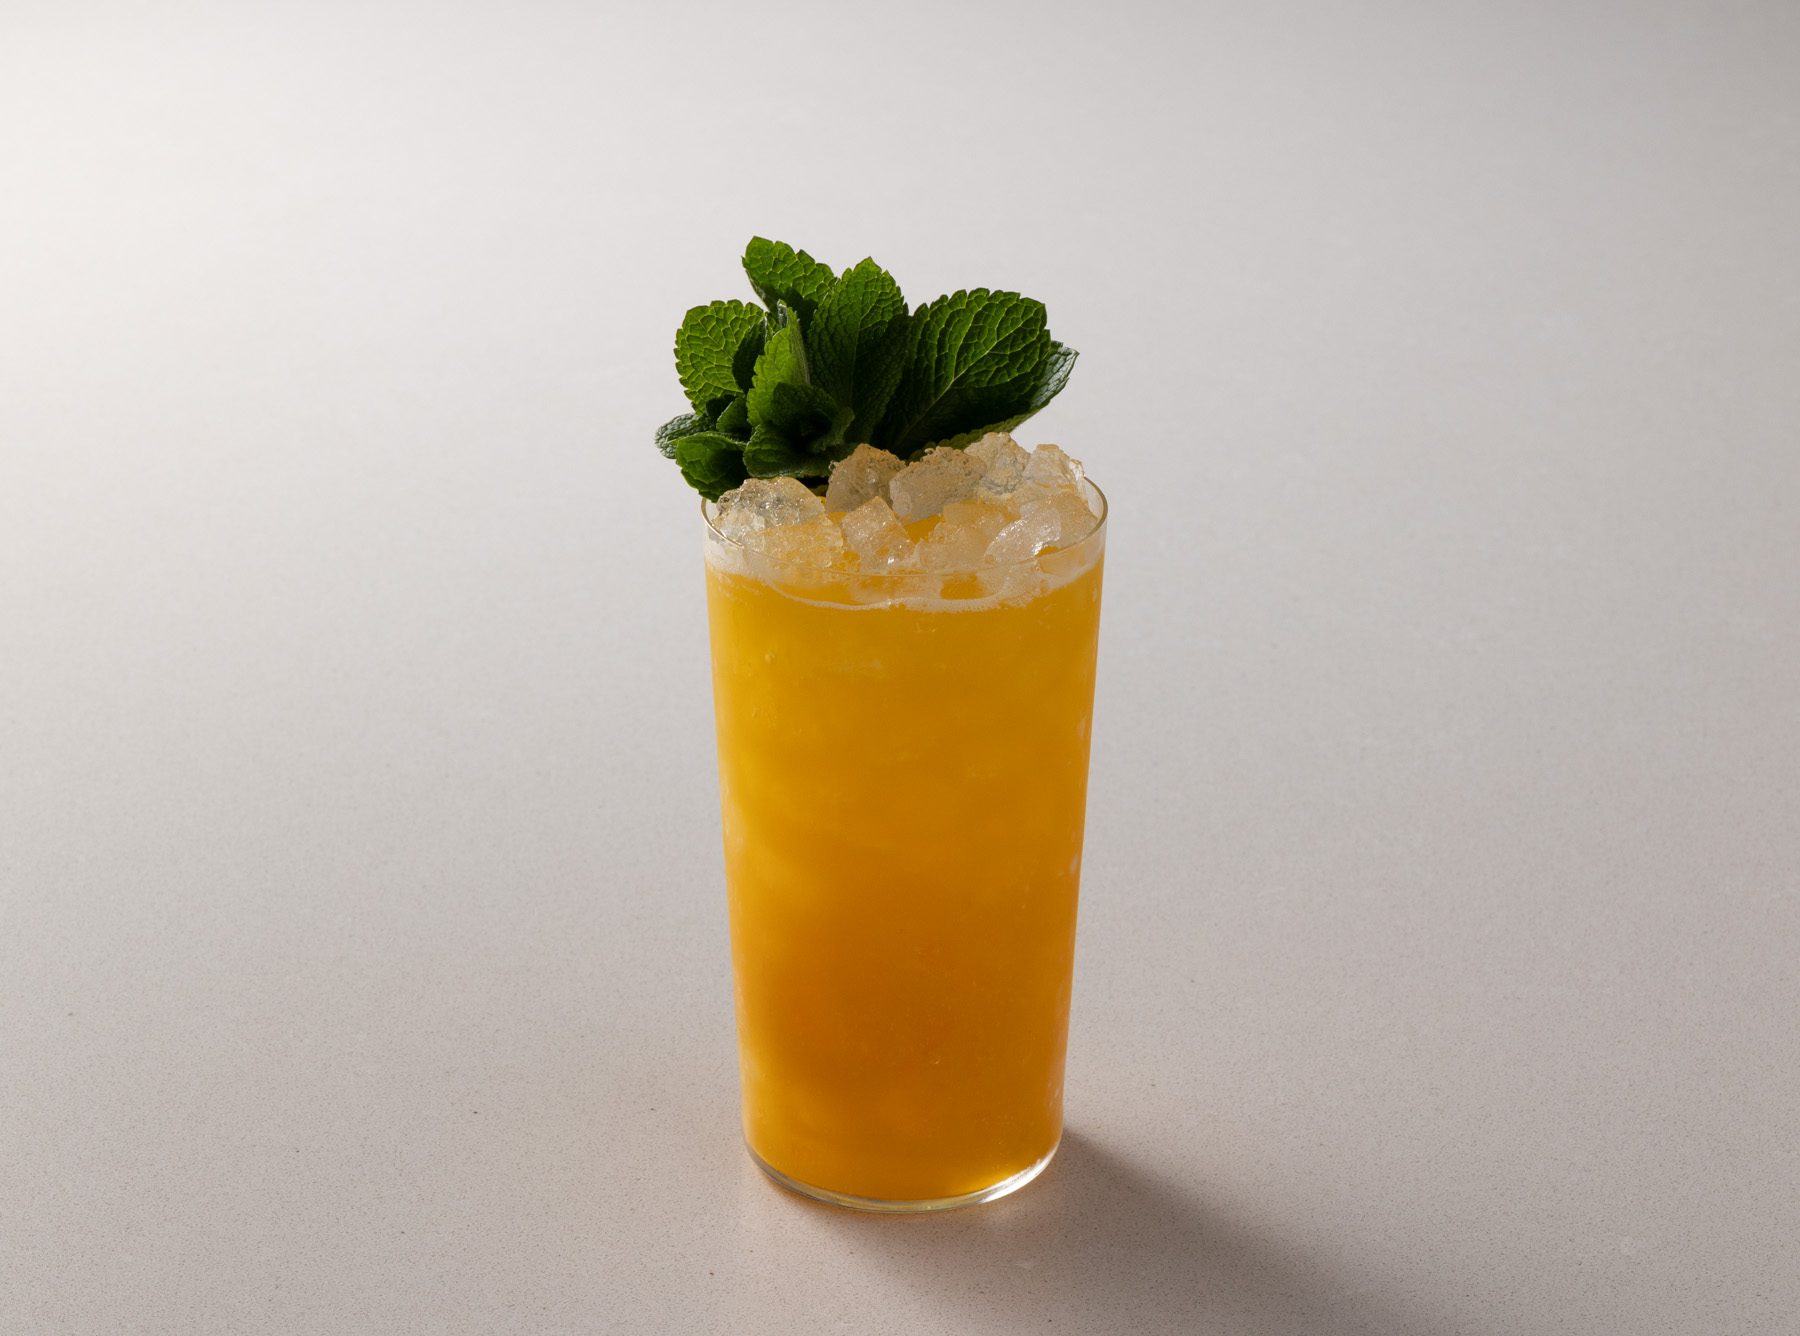 Hurricane cocktail